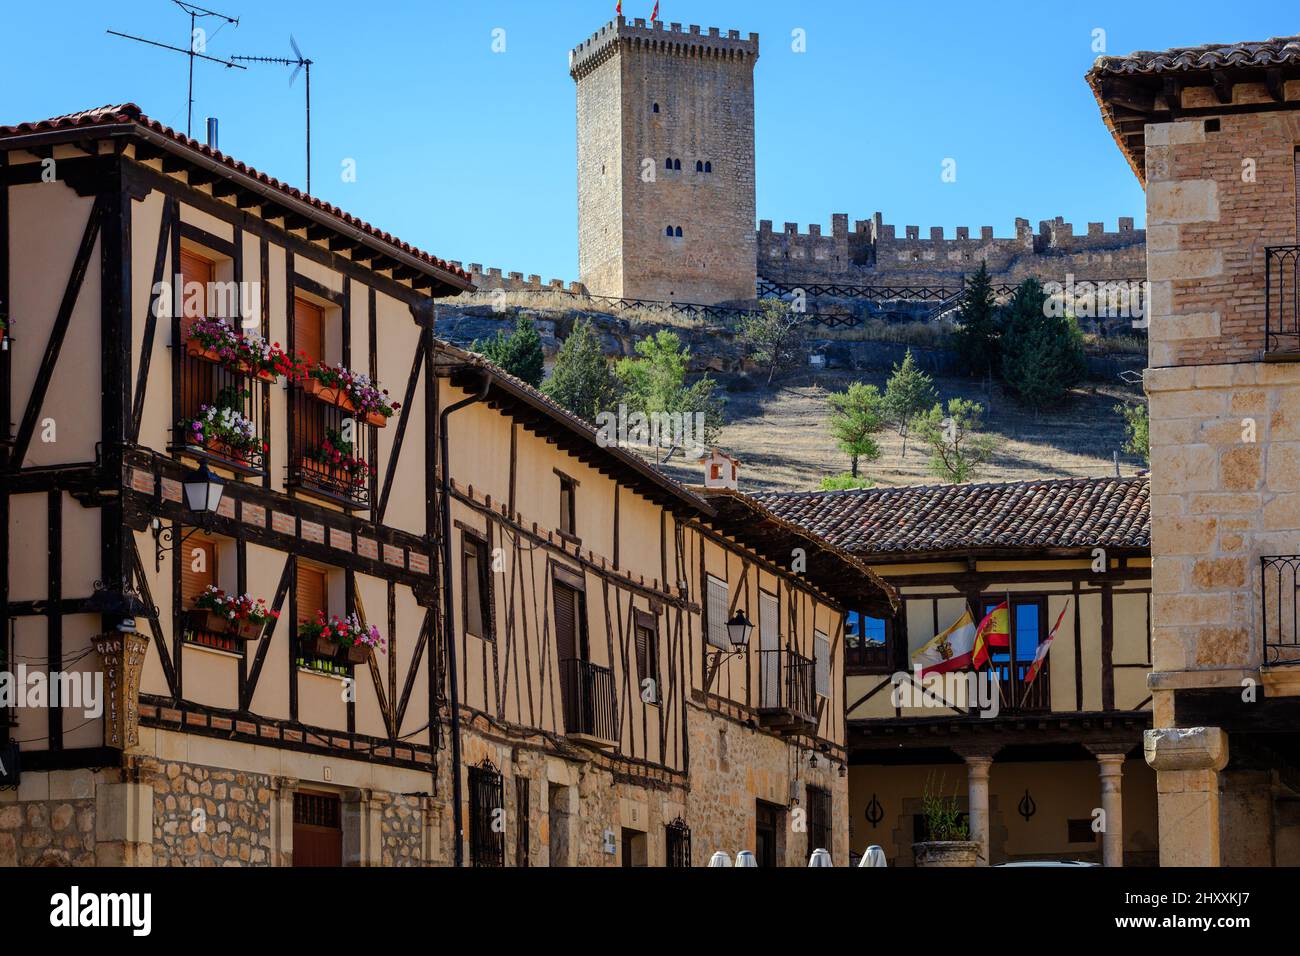 Castle and typical houses in the town of Pena Aranda de Duero. Burgos. Spain. Stock Photo